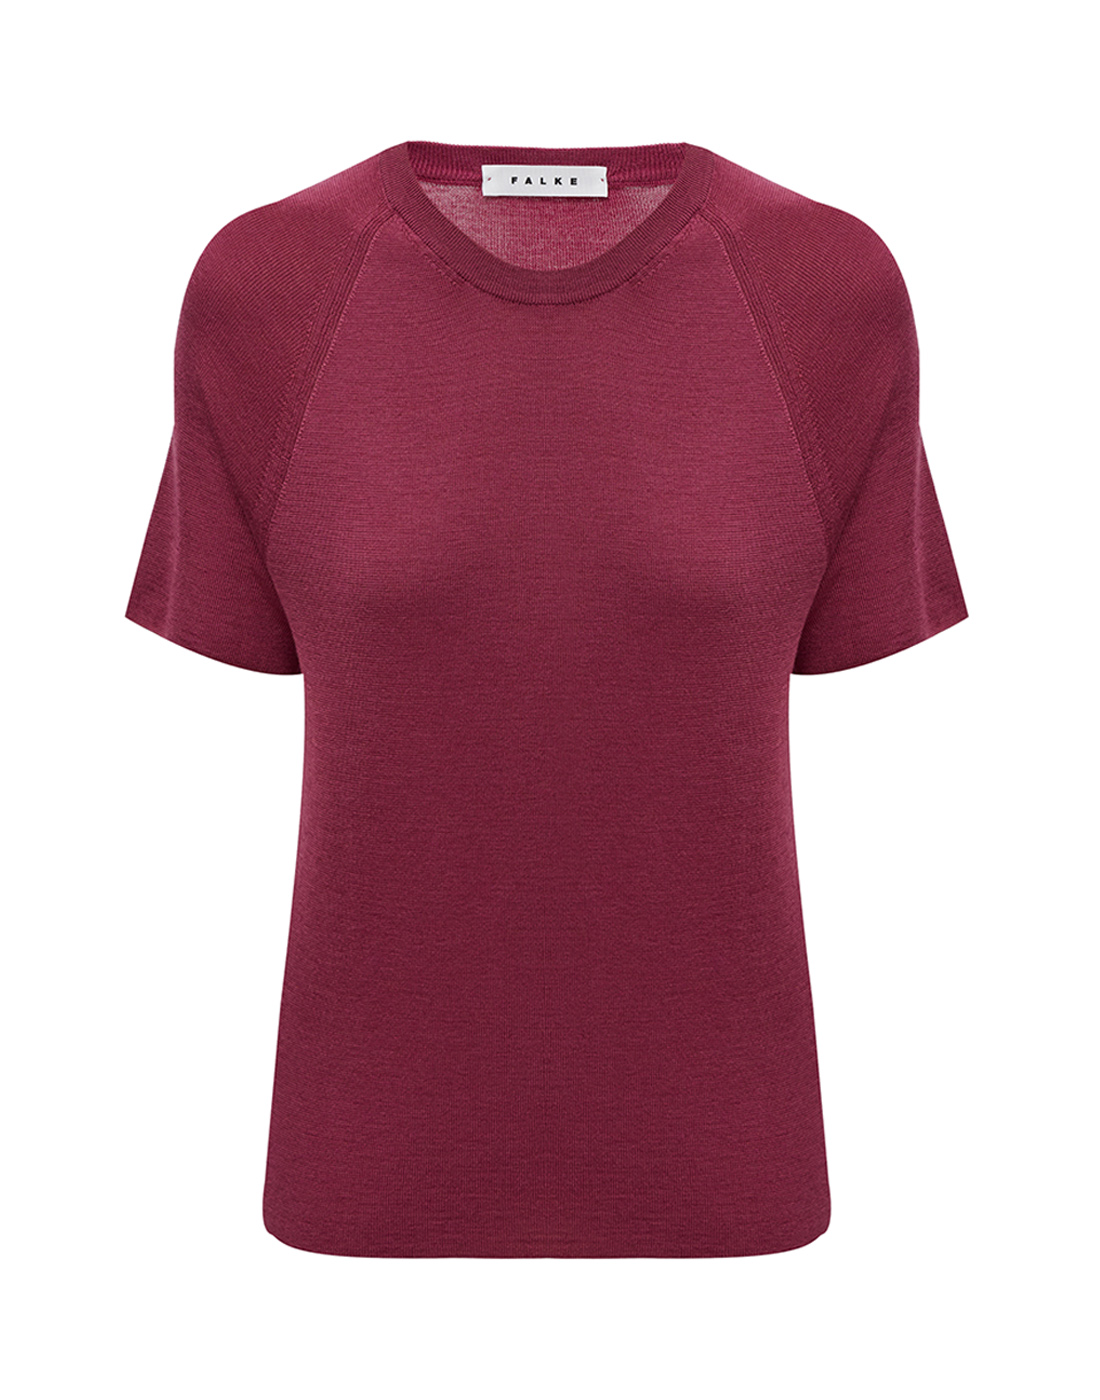 Женская бордовая шерстяная футболка Falke Fashion S64157/8626-1